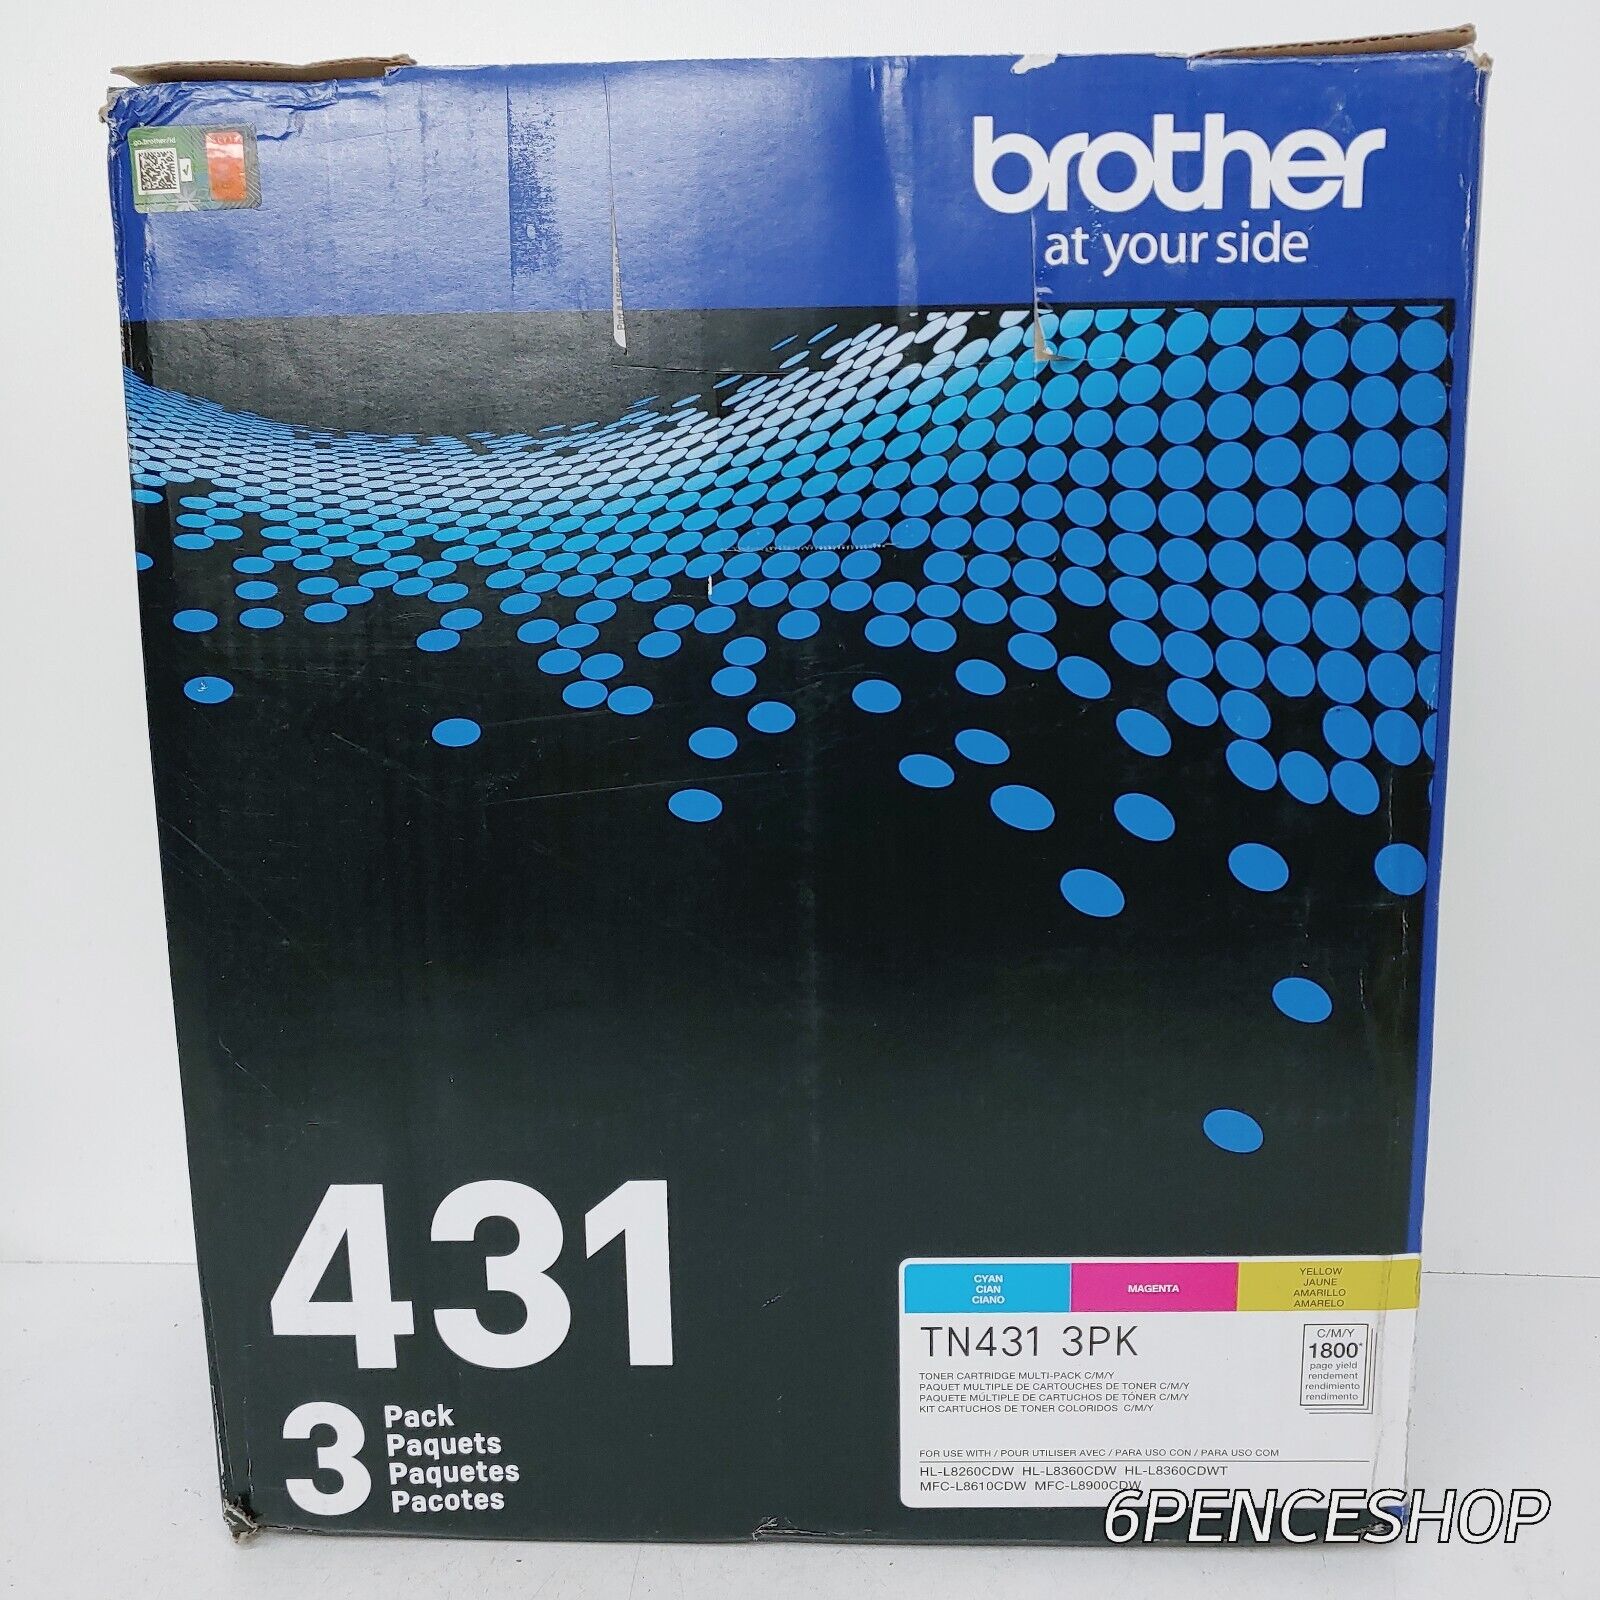 New Brother 431 3PK C/M/Y Toner Cartridge TN431 3PK